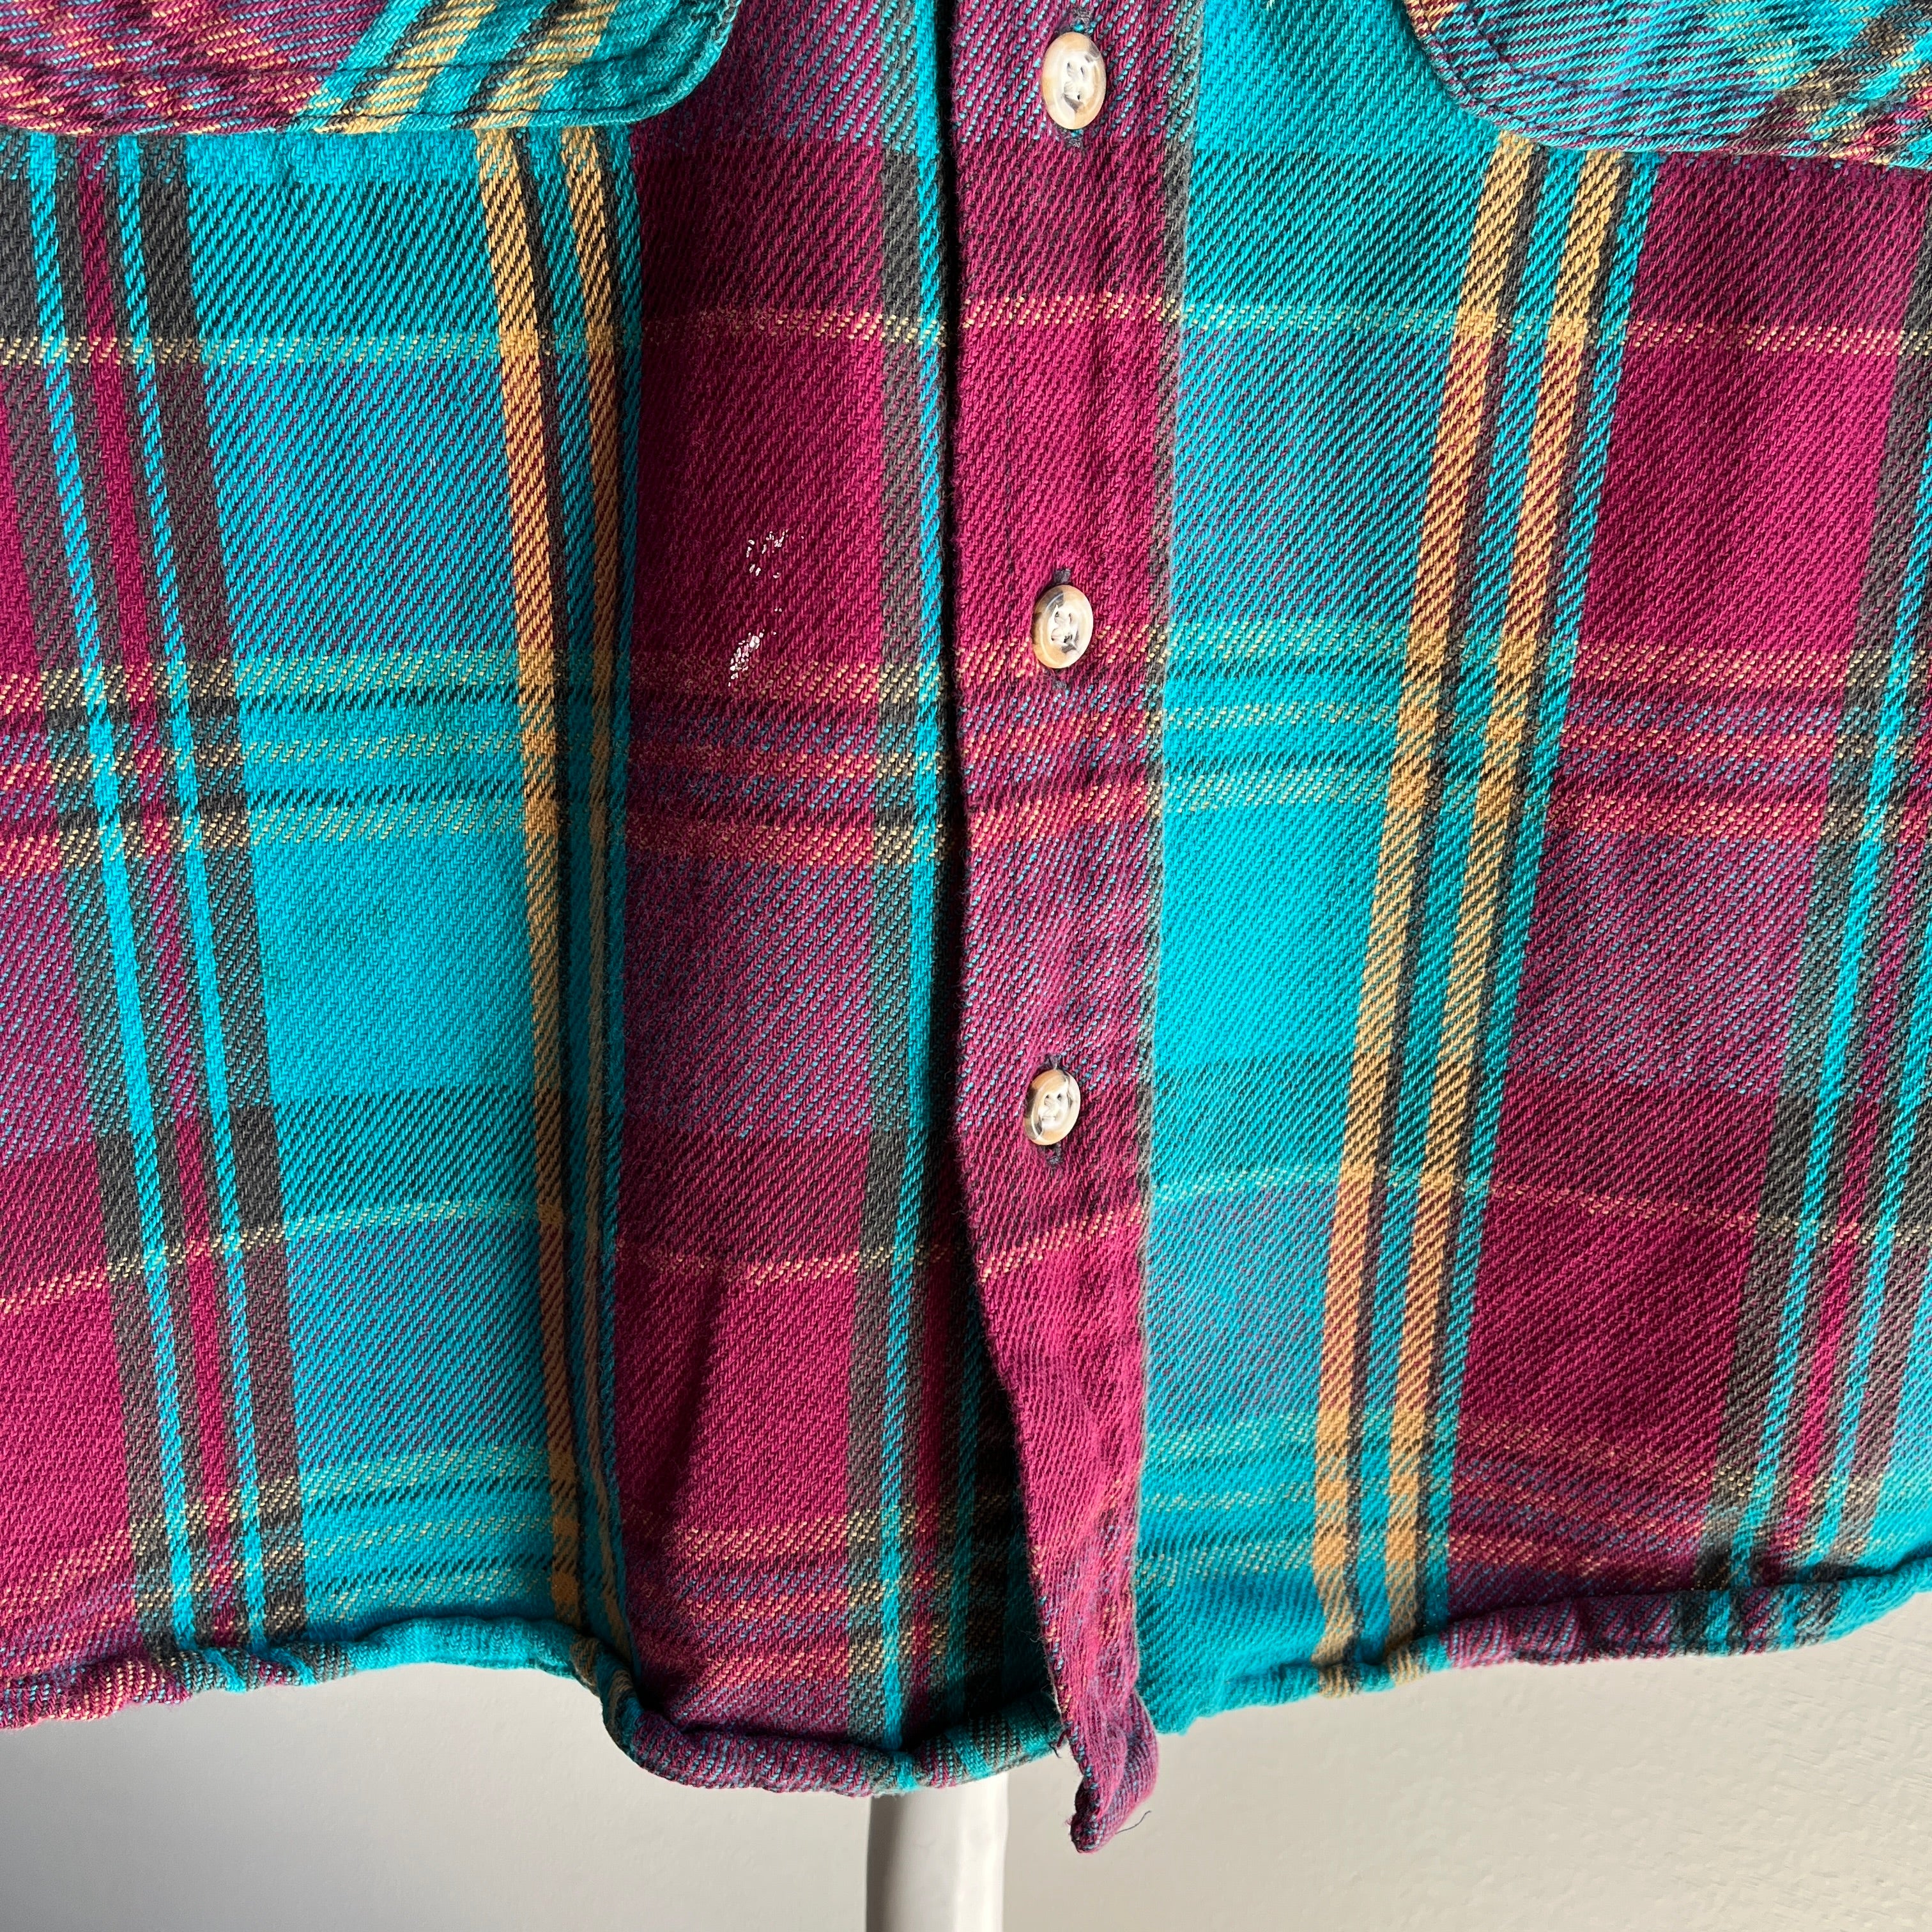 1990s Smaller Sized Cotton Flannel of Someone's Dreams?